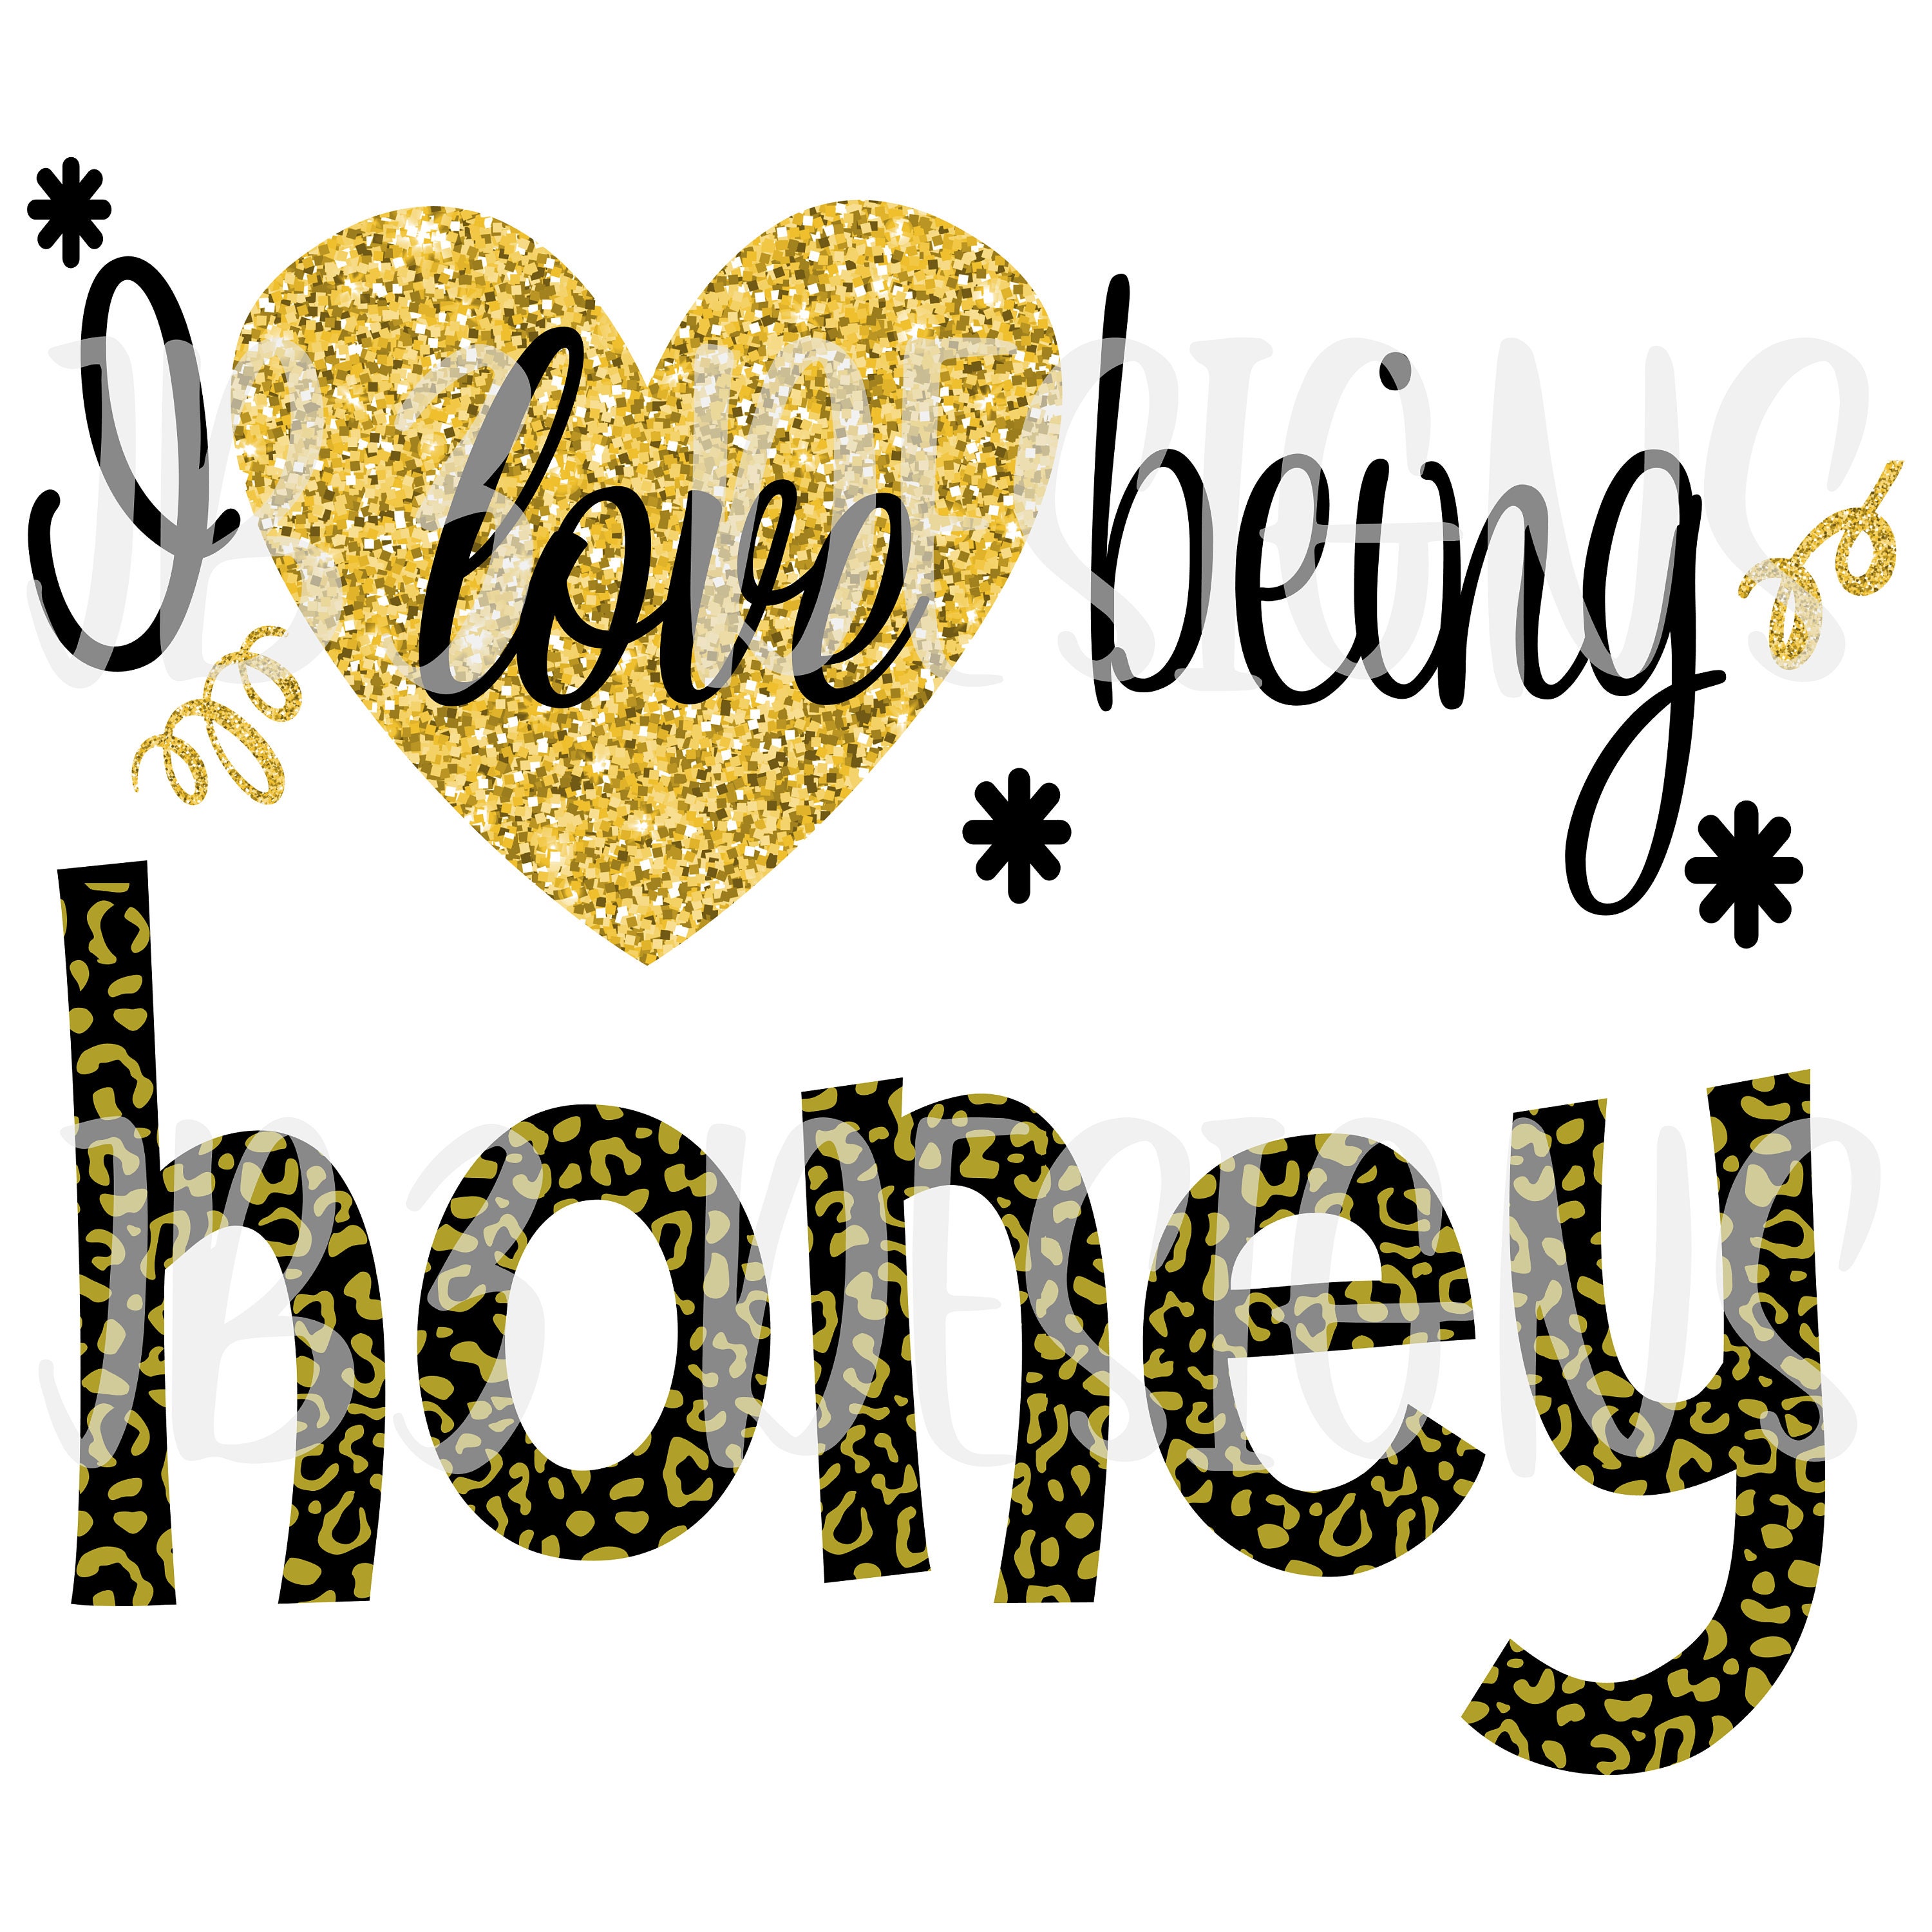 Honey Love Extract With Pheromones, Miel De Amor, Honey Love